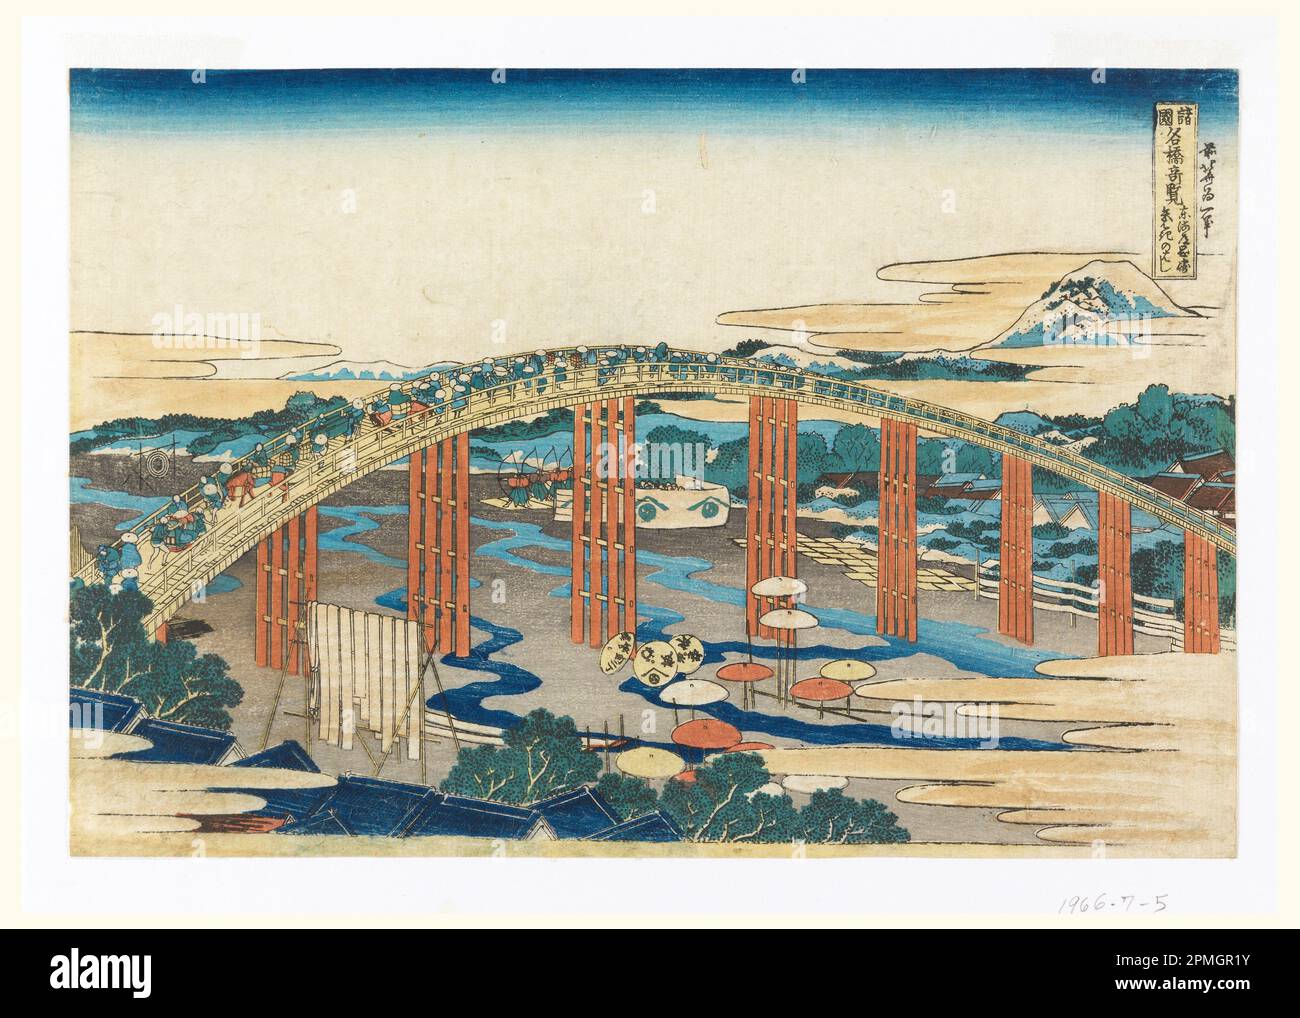 Woodblock Print, Tokaido Okazaki, Yahagi no bashi (le pont des Archers à Okazaki, sur le Takaido), de Sho-koku Meiko Kiran (vues des ponts dans diverses provinces); Katsushika Hokusai (1760 – 1849); Japon; impression en bloc (ukiyo-e) sur mûrier (24,8 x 36,5 cm); 9 3/4 x 14 3/8 cm x cm x cm x cm x 10 cm x 10 cm x 10 cm x 10 cm x 10 cm x 10 cm x 10 cm (6 cm) Banque D'Images